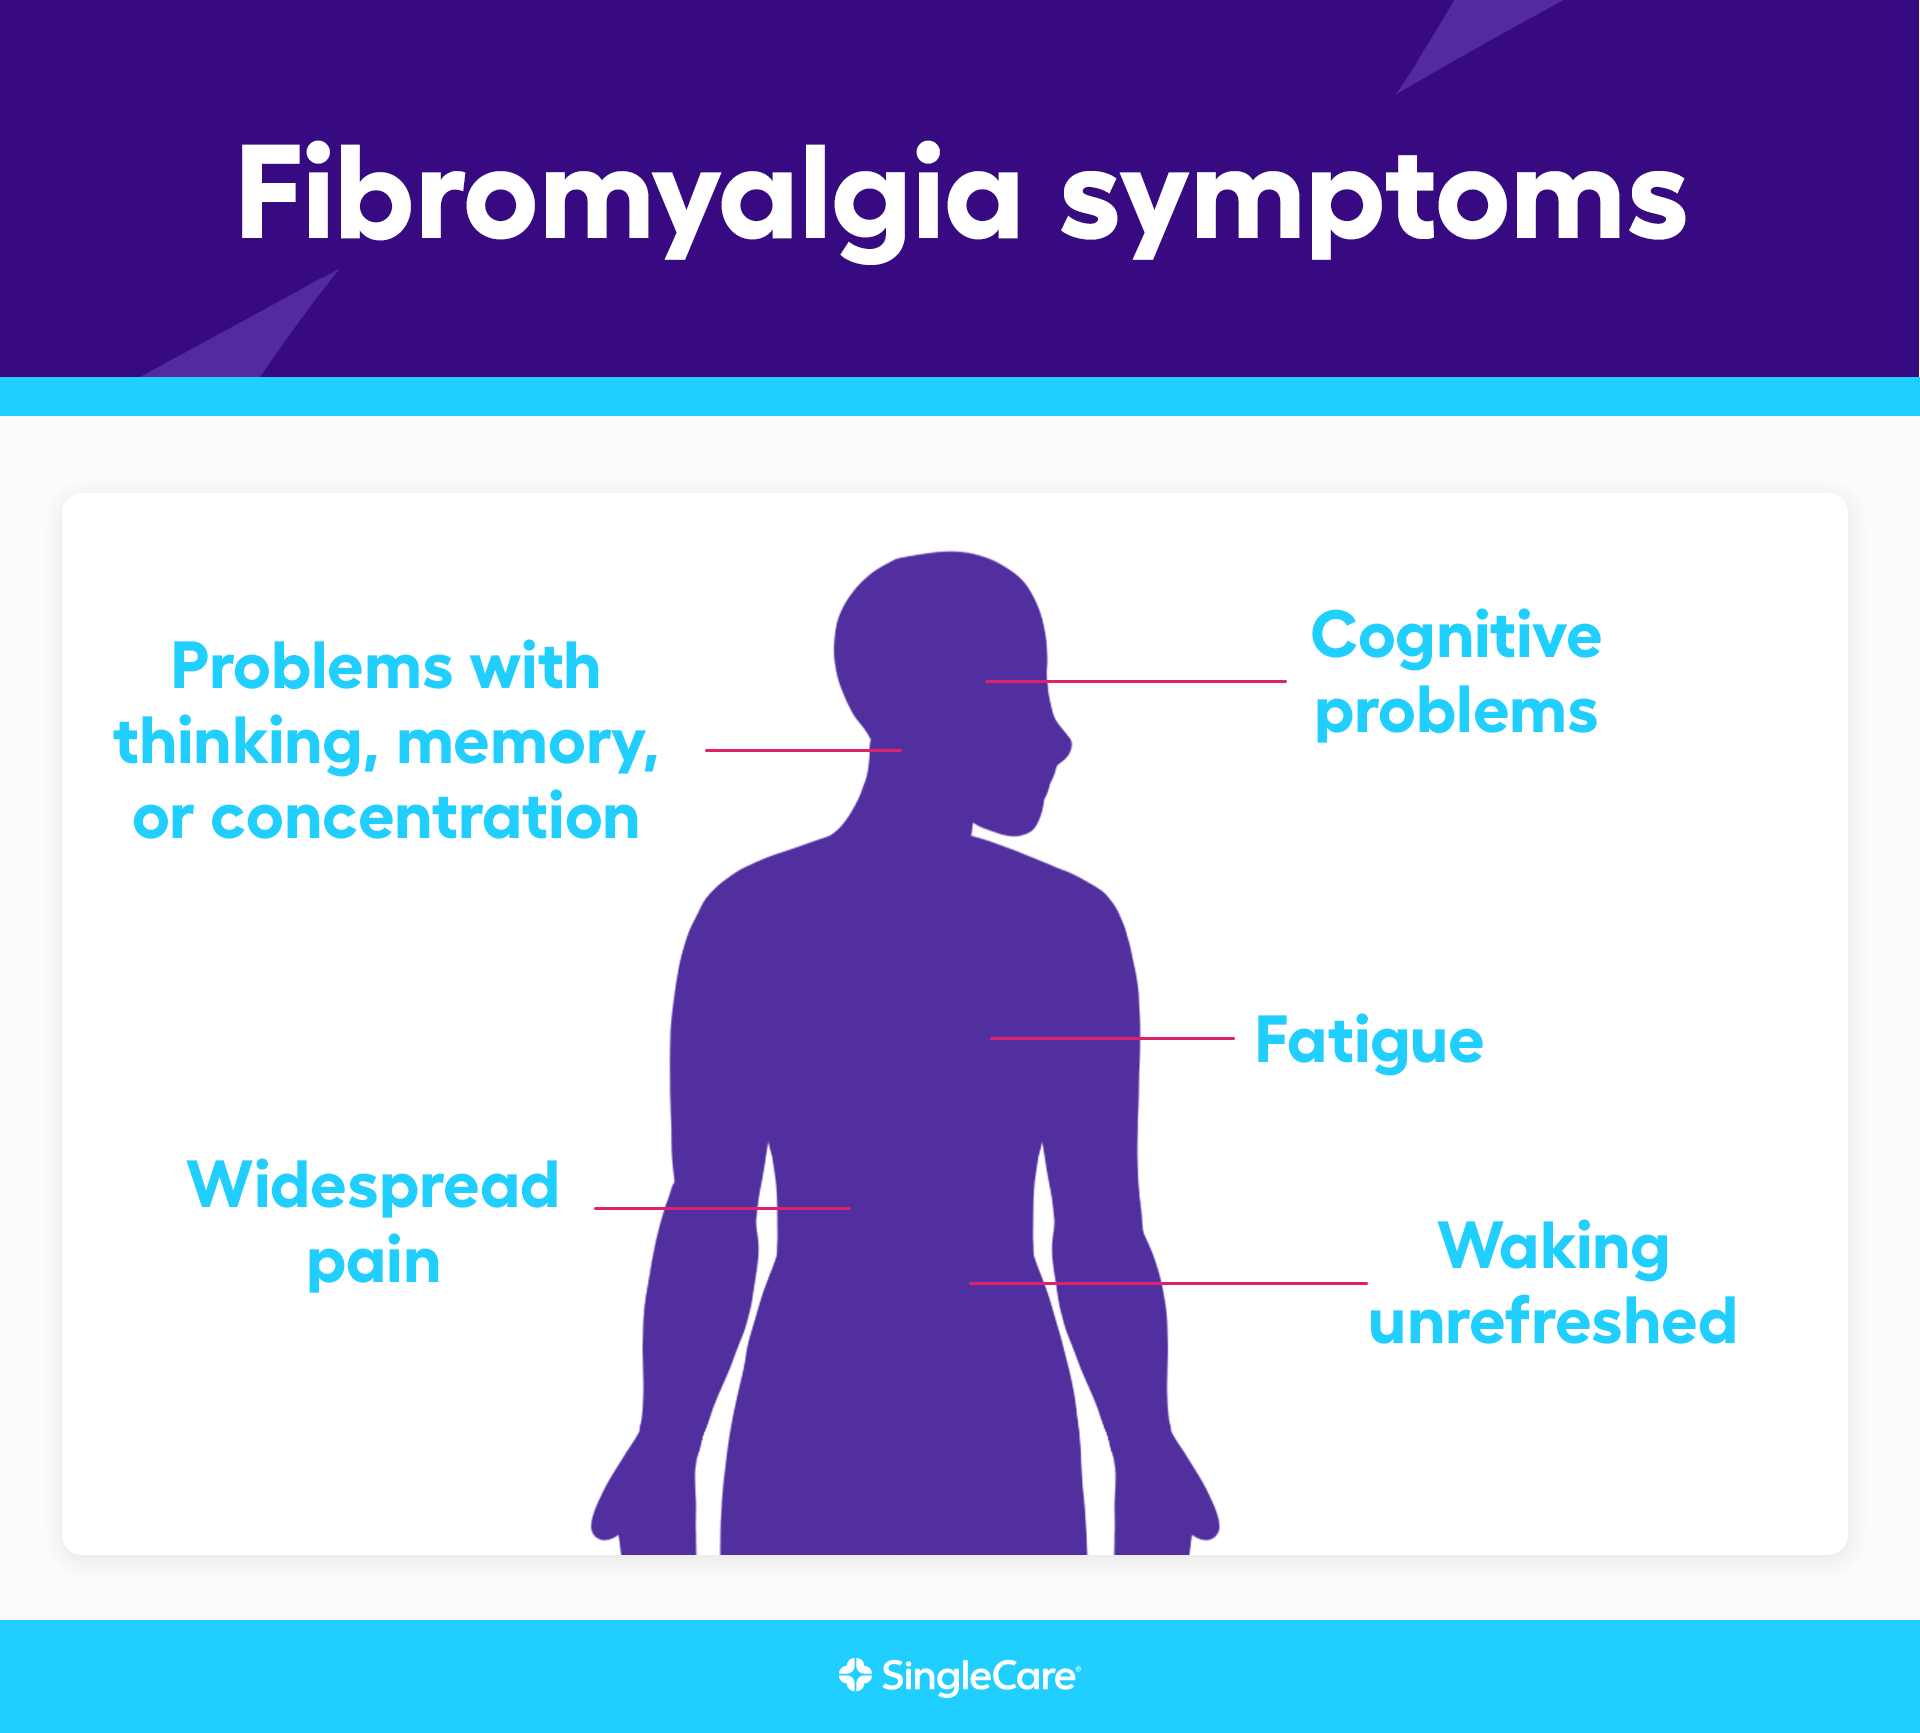 What are the symptoms of fibromyalgia?